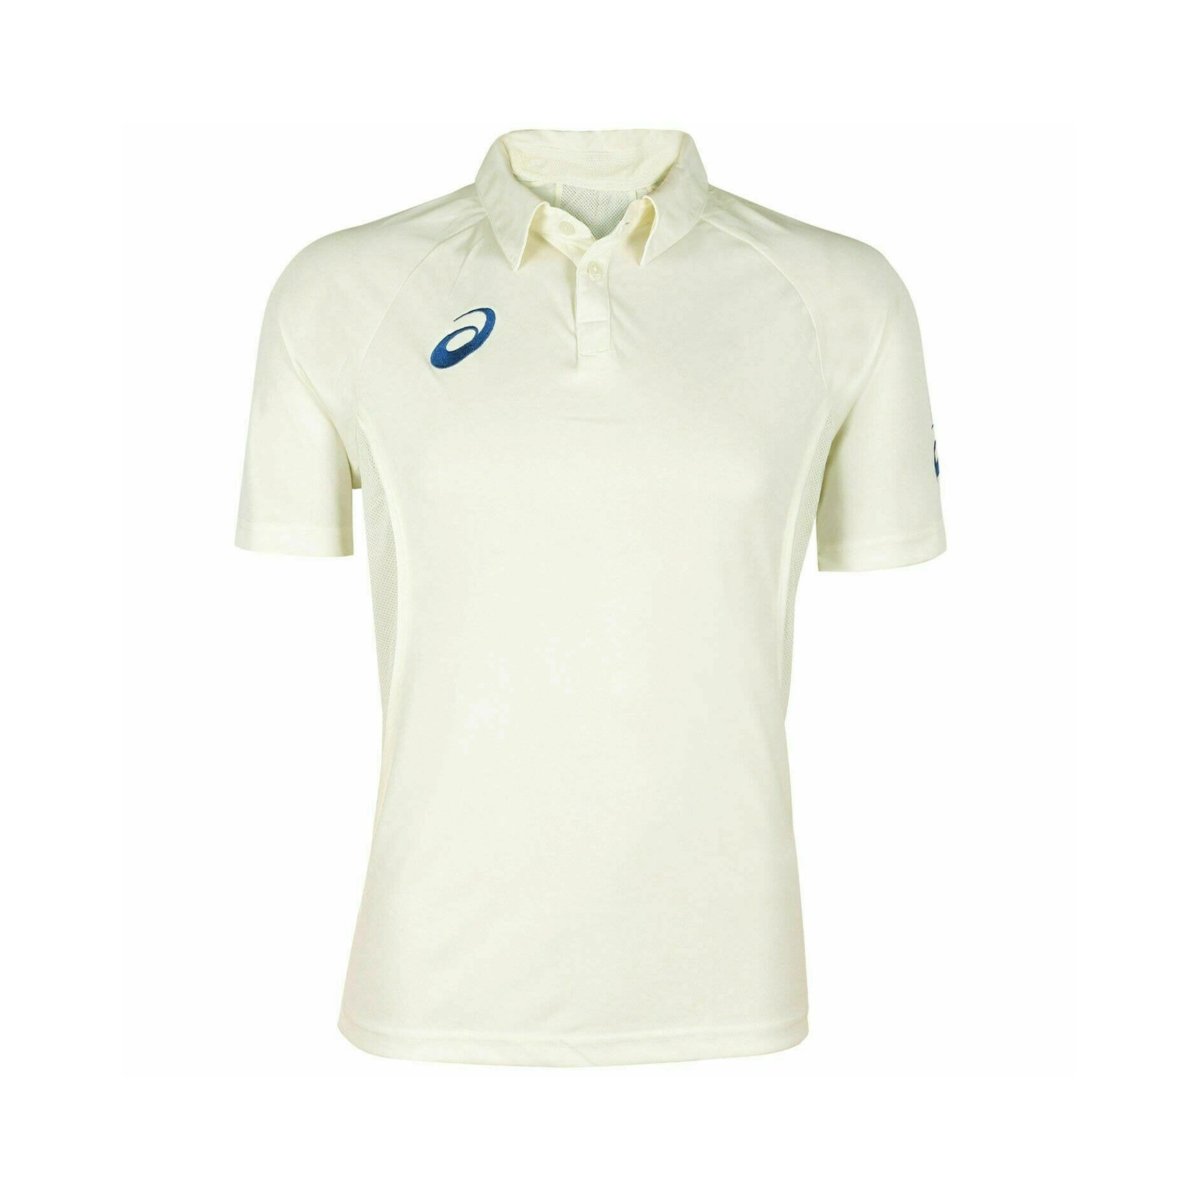 Asics Short Sleeves Cricket Shirt Cream